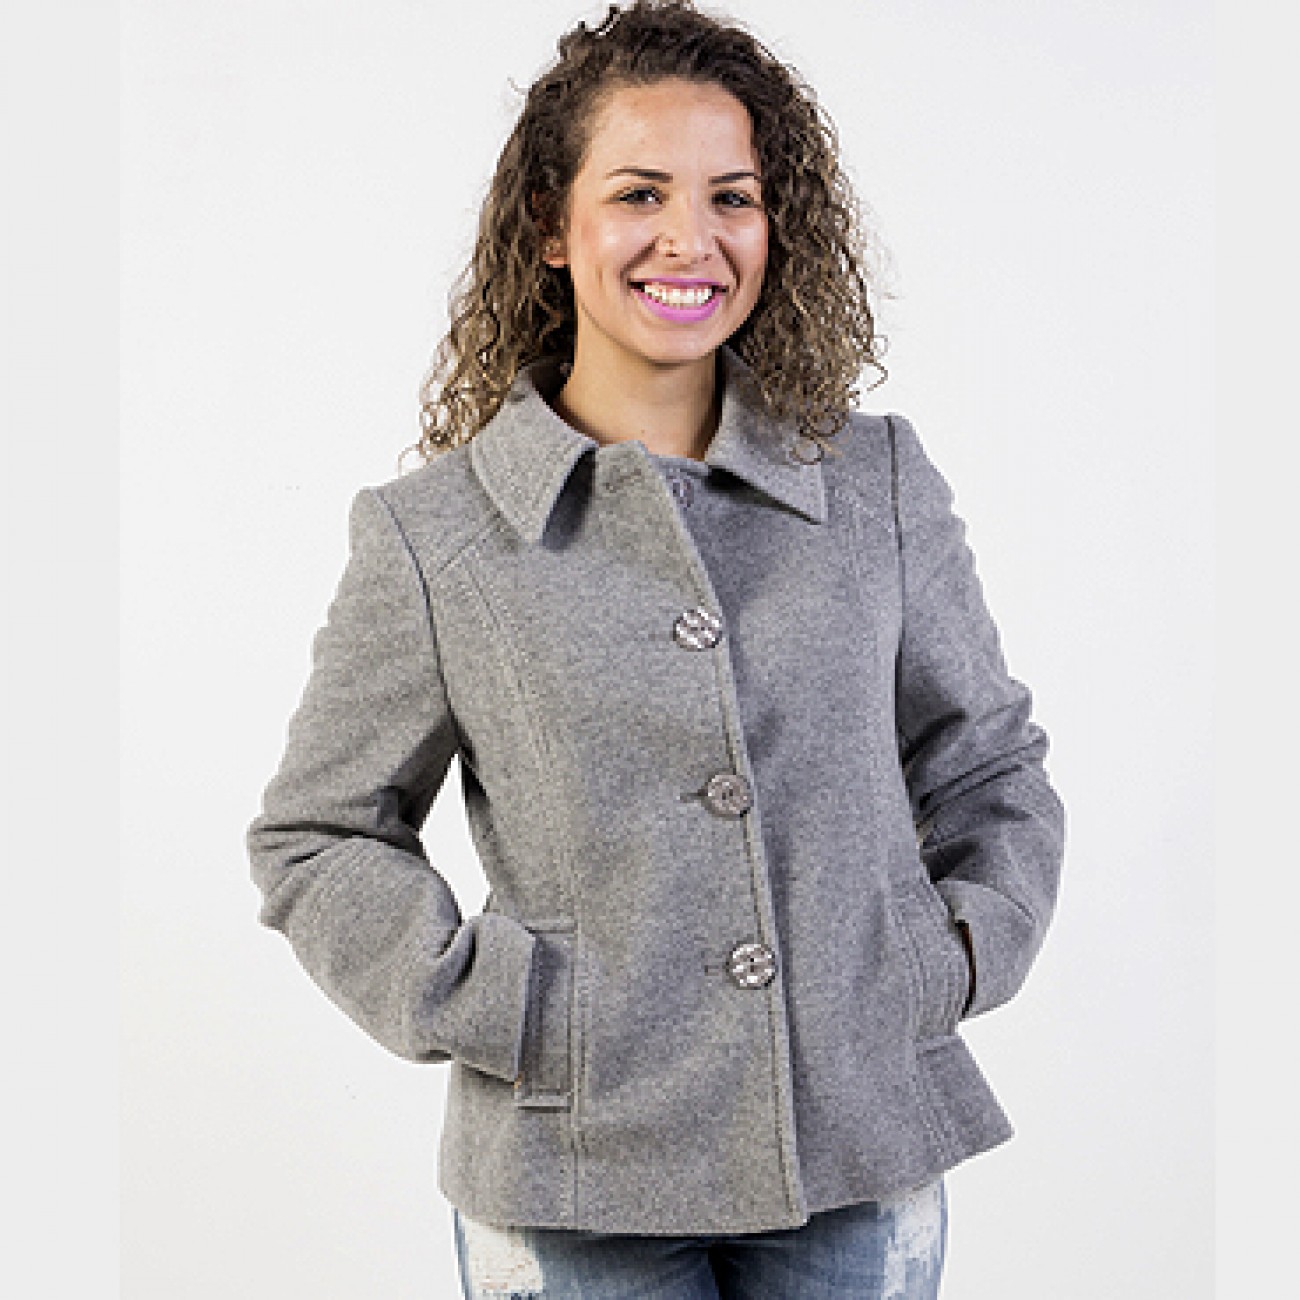 casaco cashmere feminino